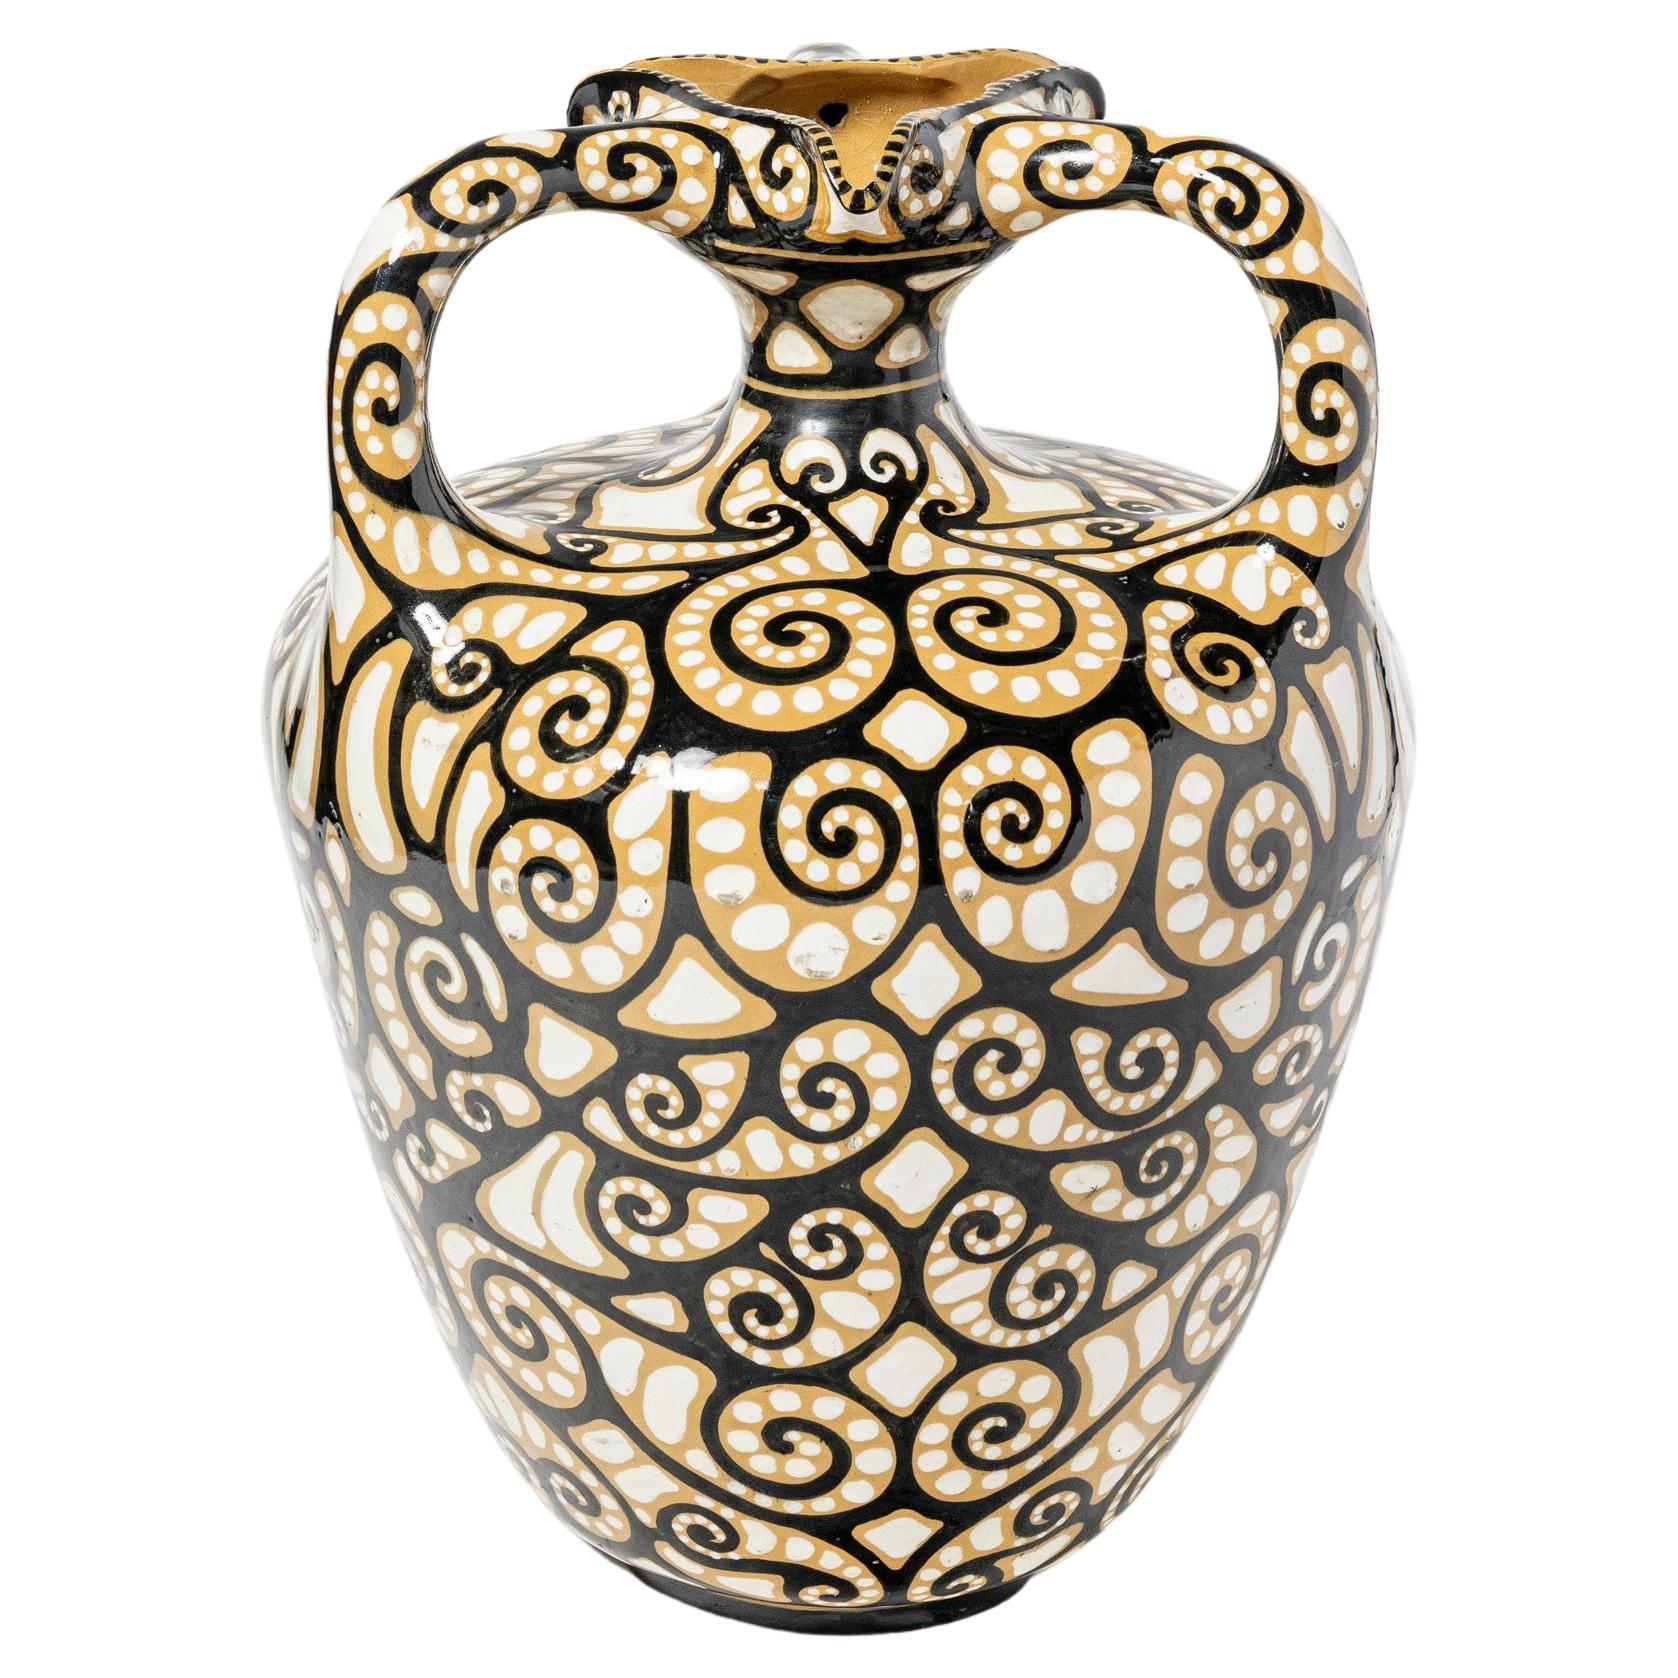 Enamel Ceramic Vase Signed V. Cavalieri, Argentina, circa 1940.